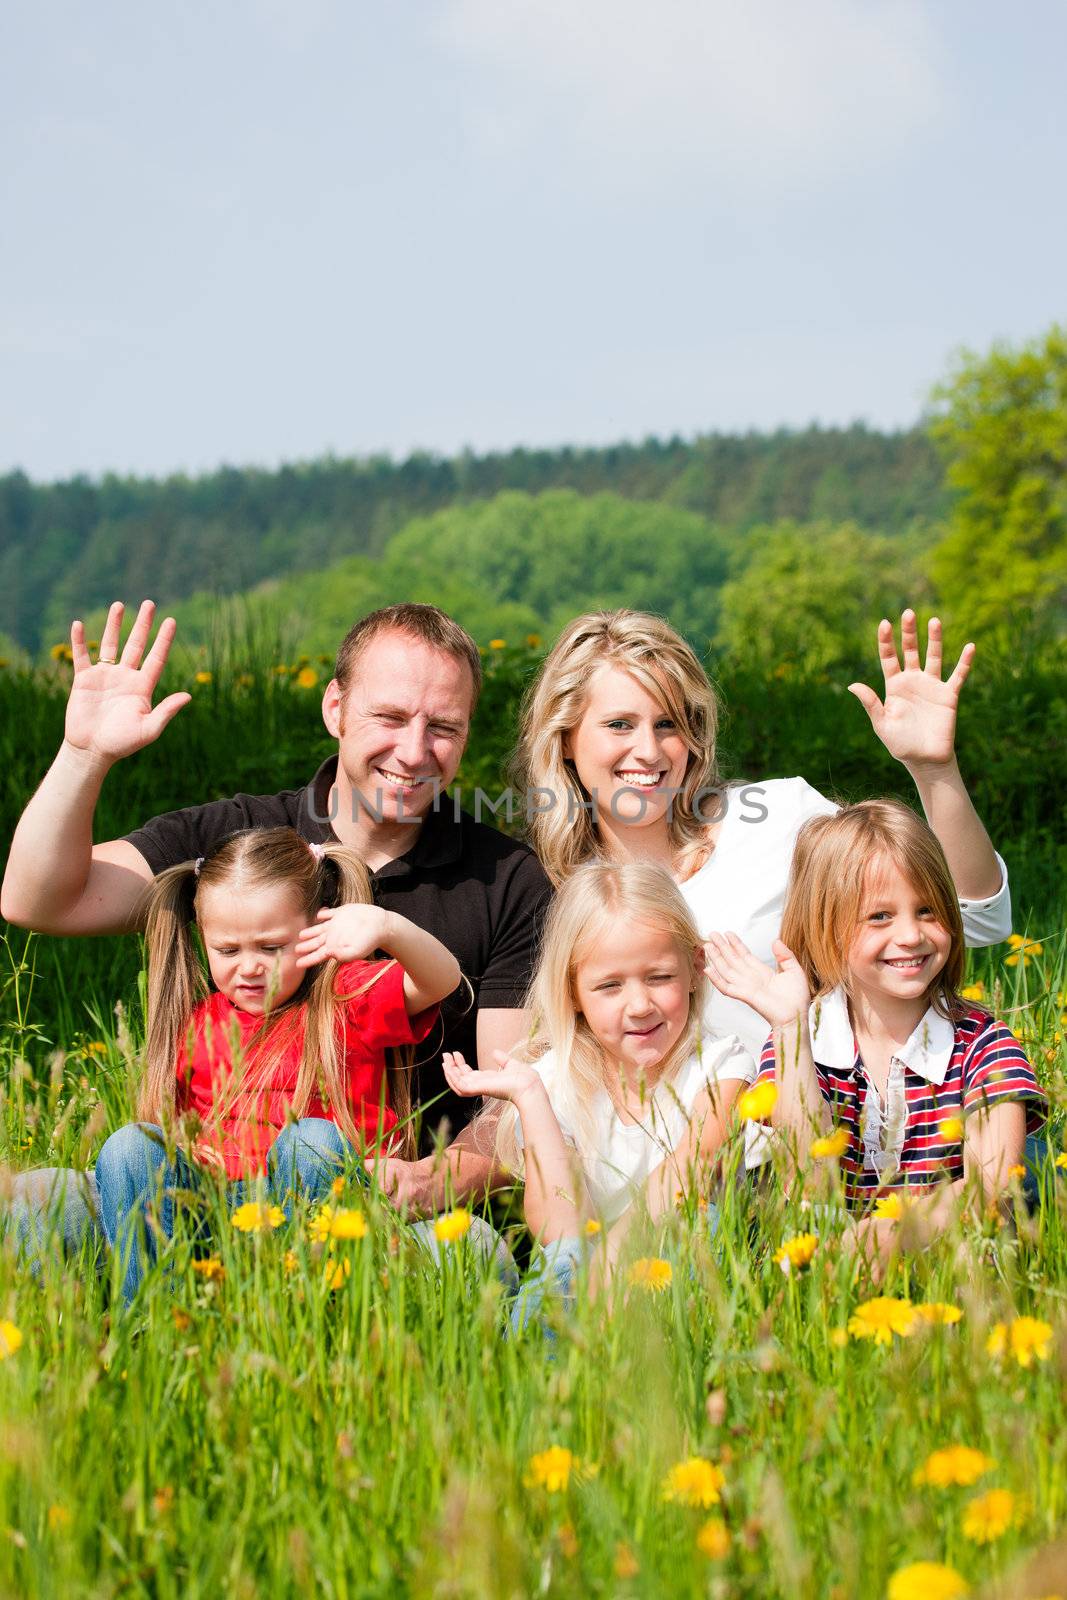 Happy family sitting in a meadow full of dandelions in spring, waving